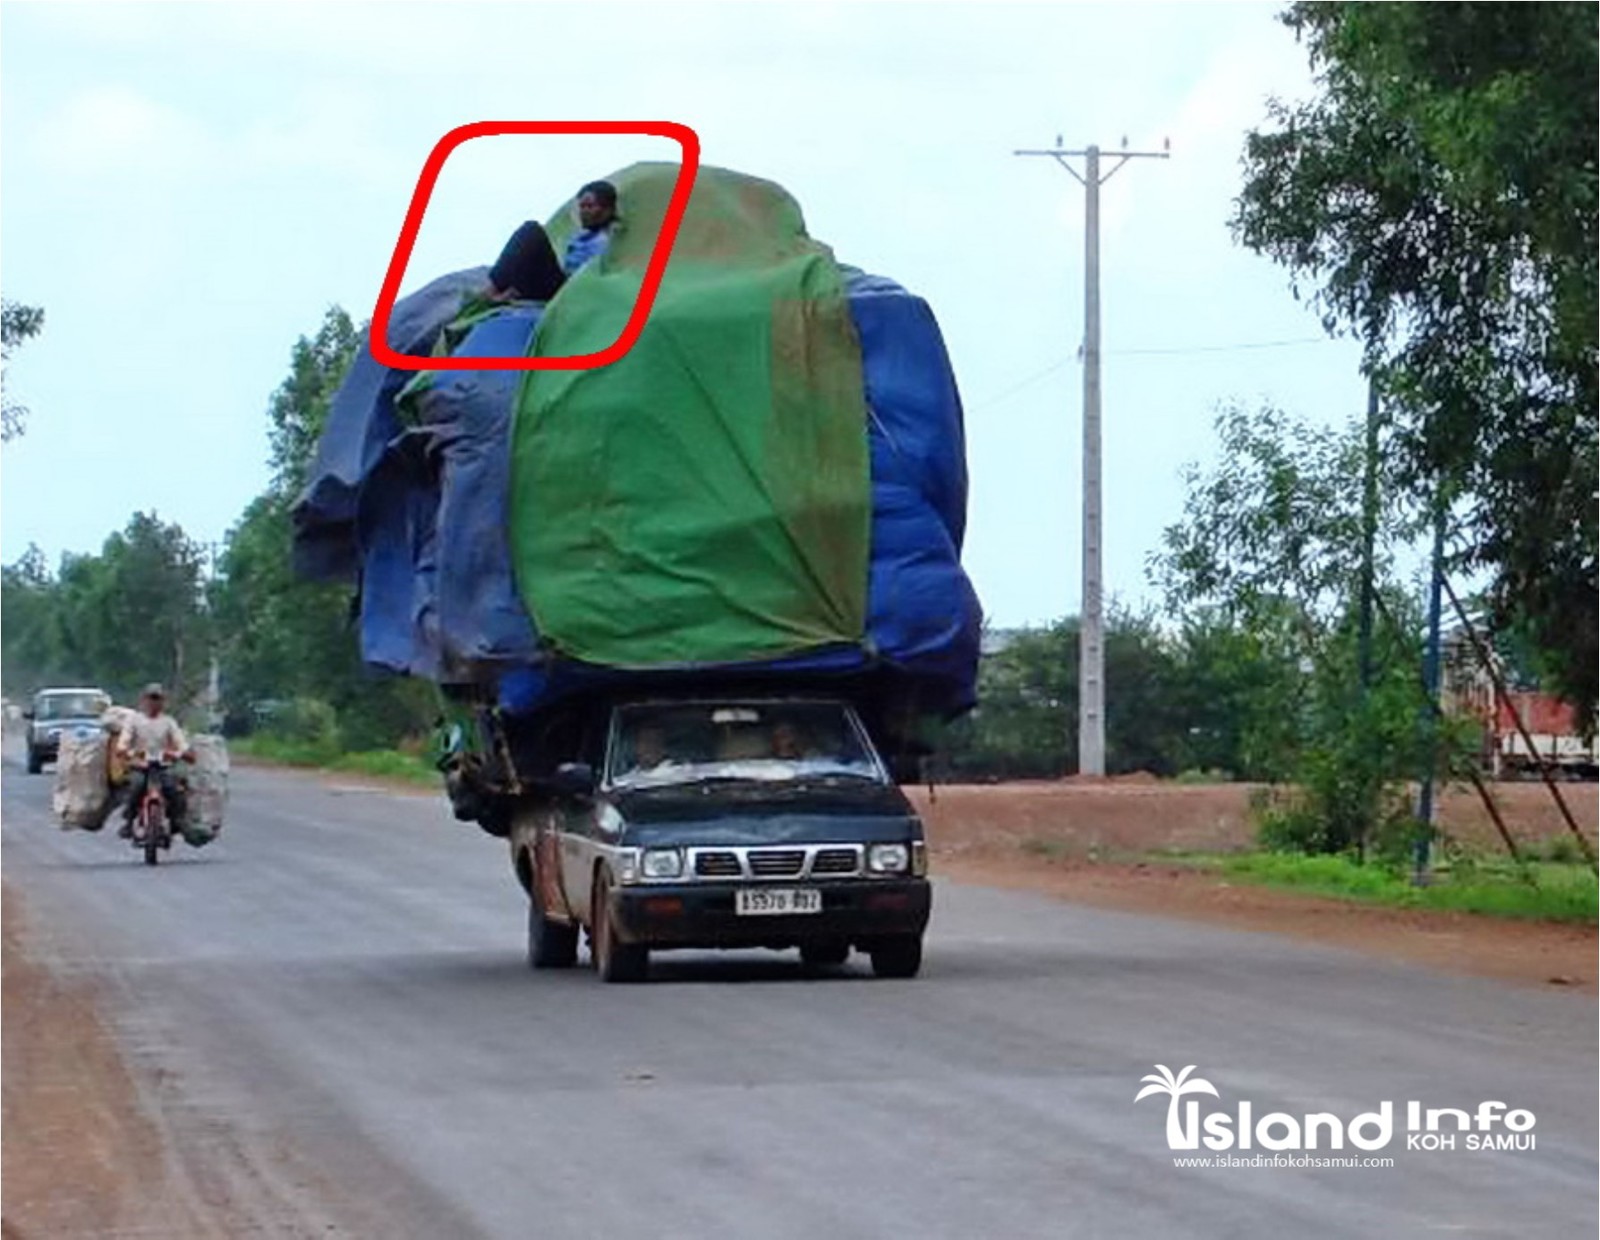 overloaded-driving-cars-motorcycles-vans-trucks-pick-ups-samui-thailand-funny-strange-unusual-3.jpg